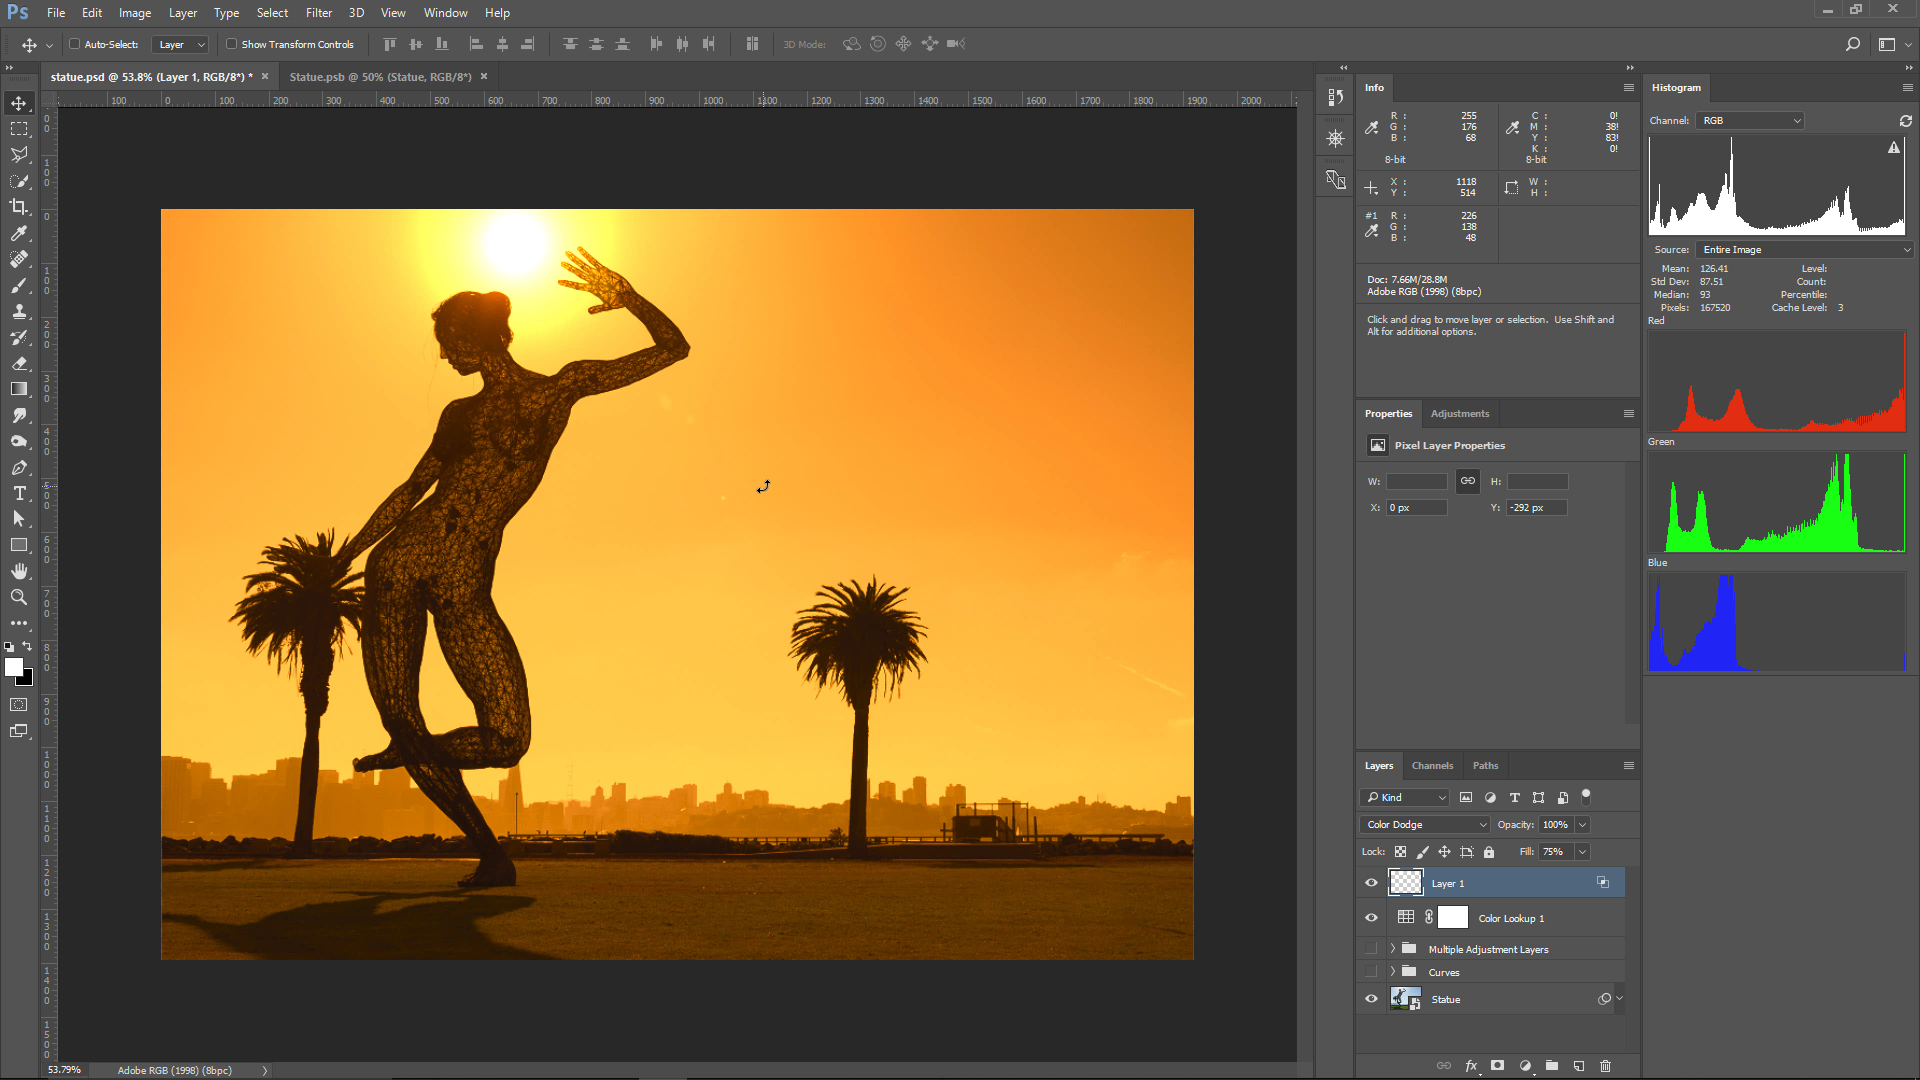 Mastering Adobe Photoshop Elements 4.0 - intensiveball